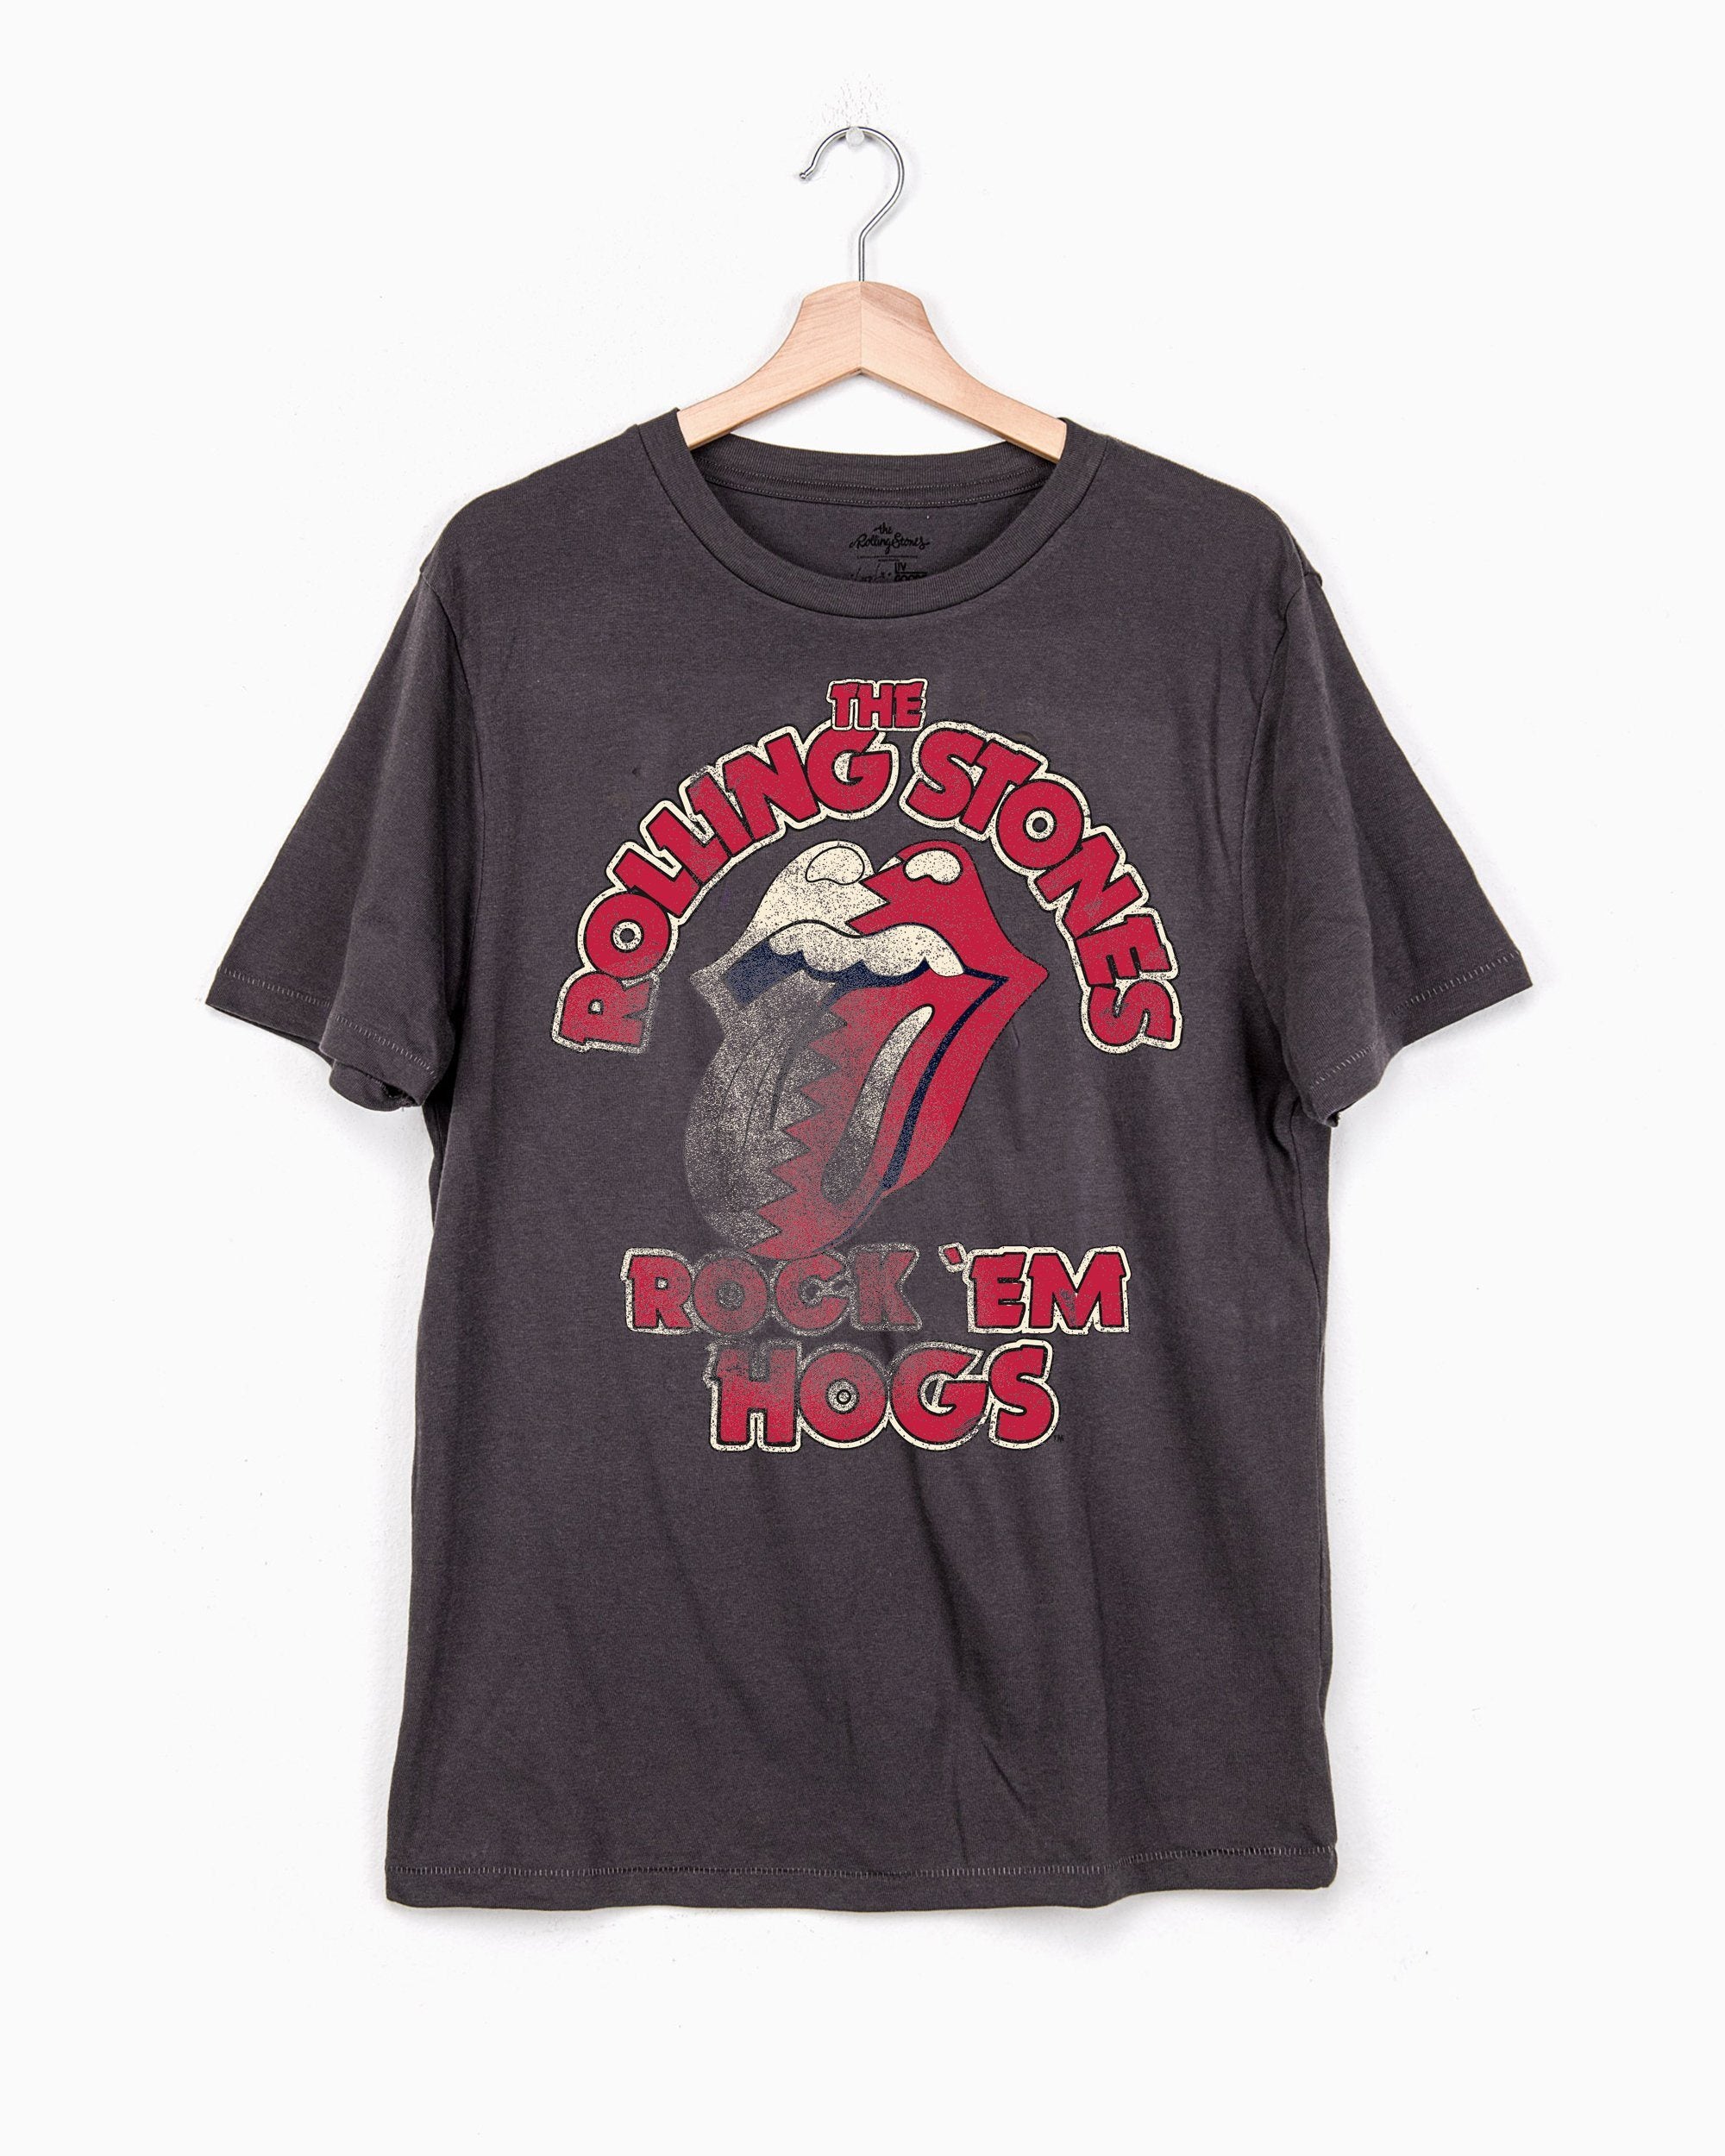 Rolling Stones Rock 'Em Hogs Charcoal Thrifted Tee - shoplivylu